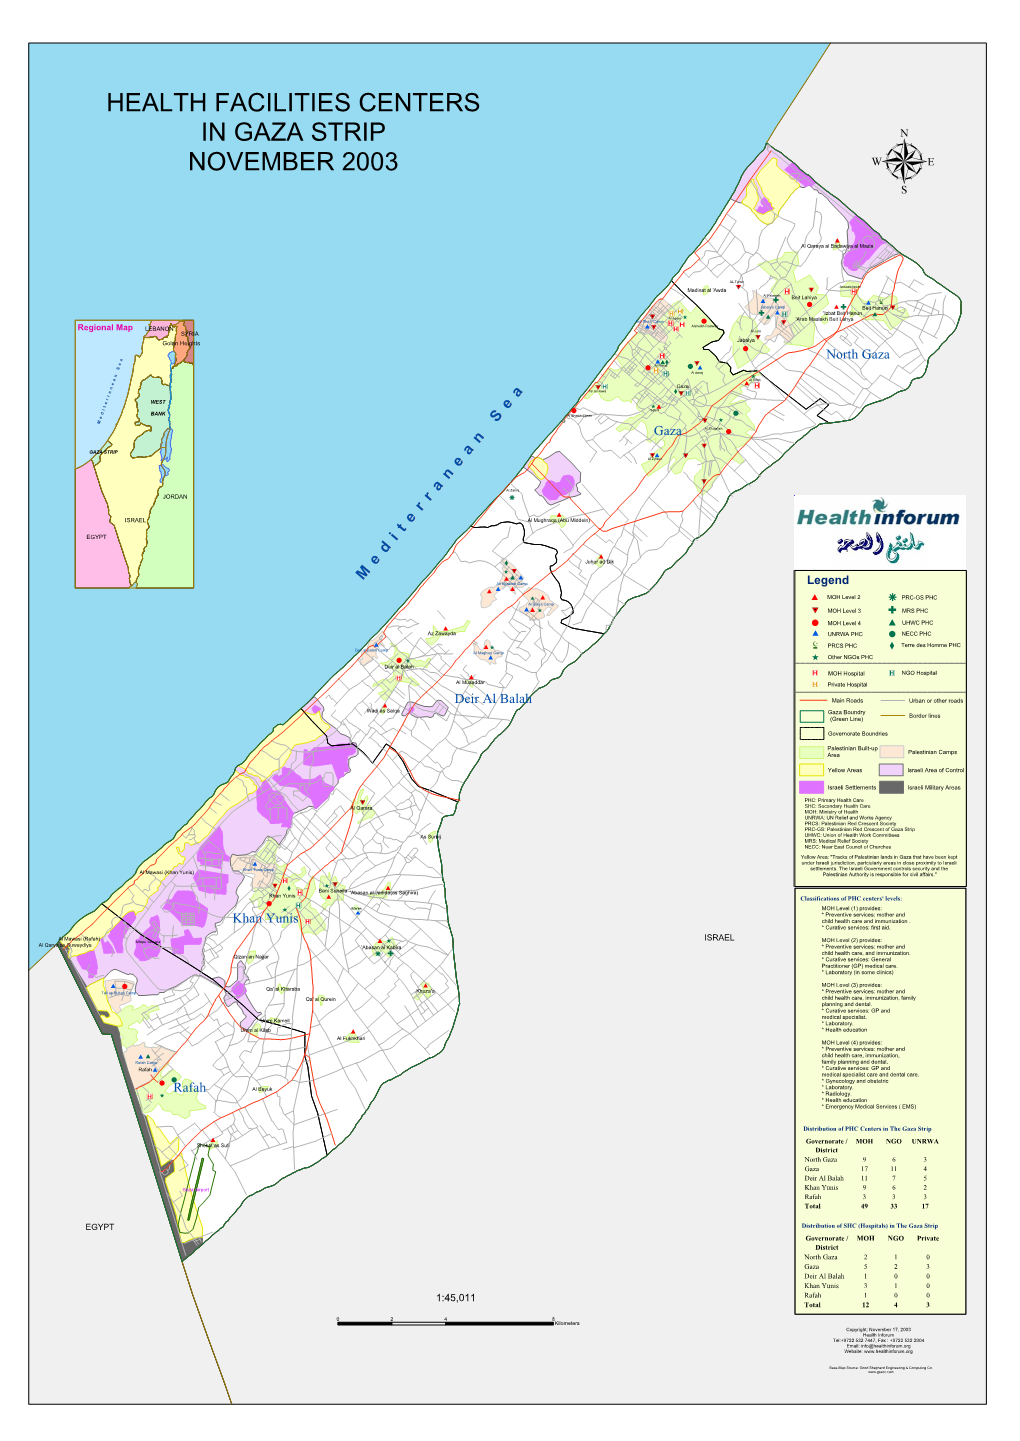 Health Facilities Centers in Gaza Strip November 2003